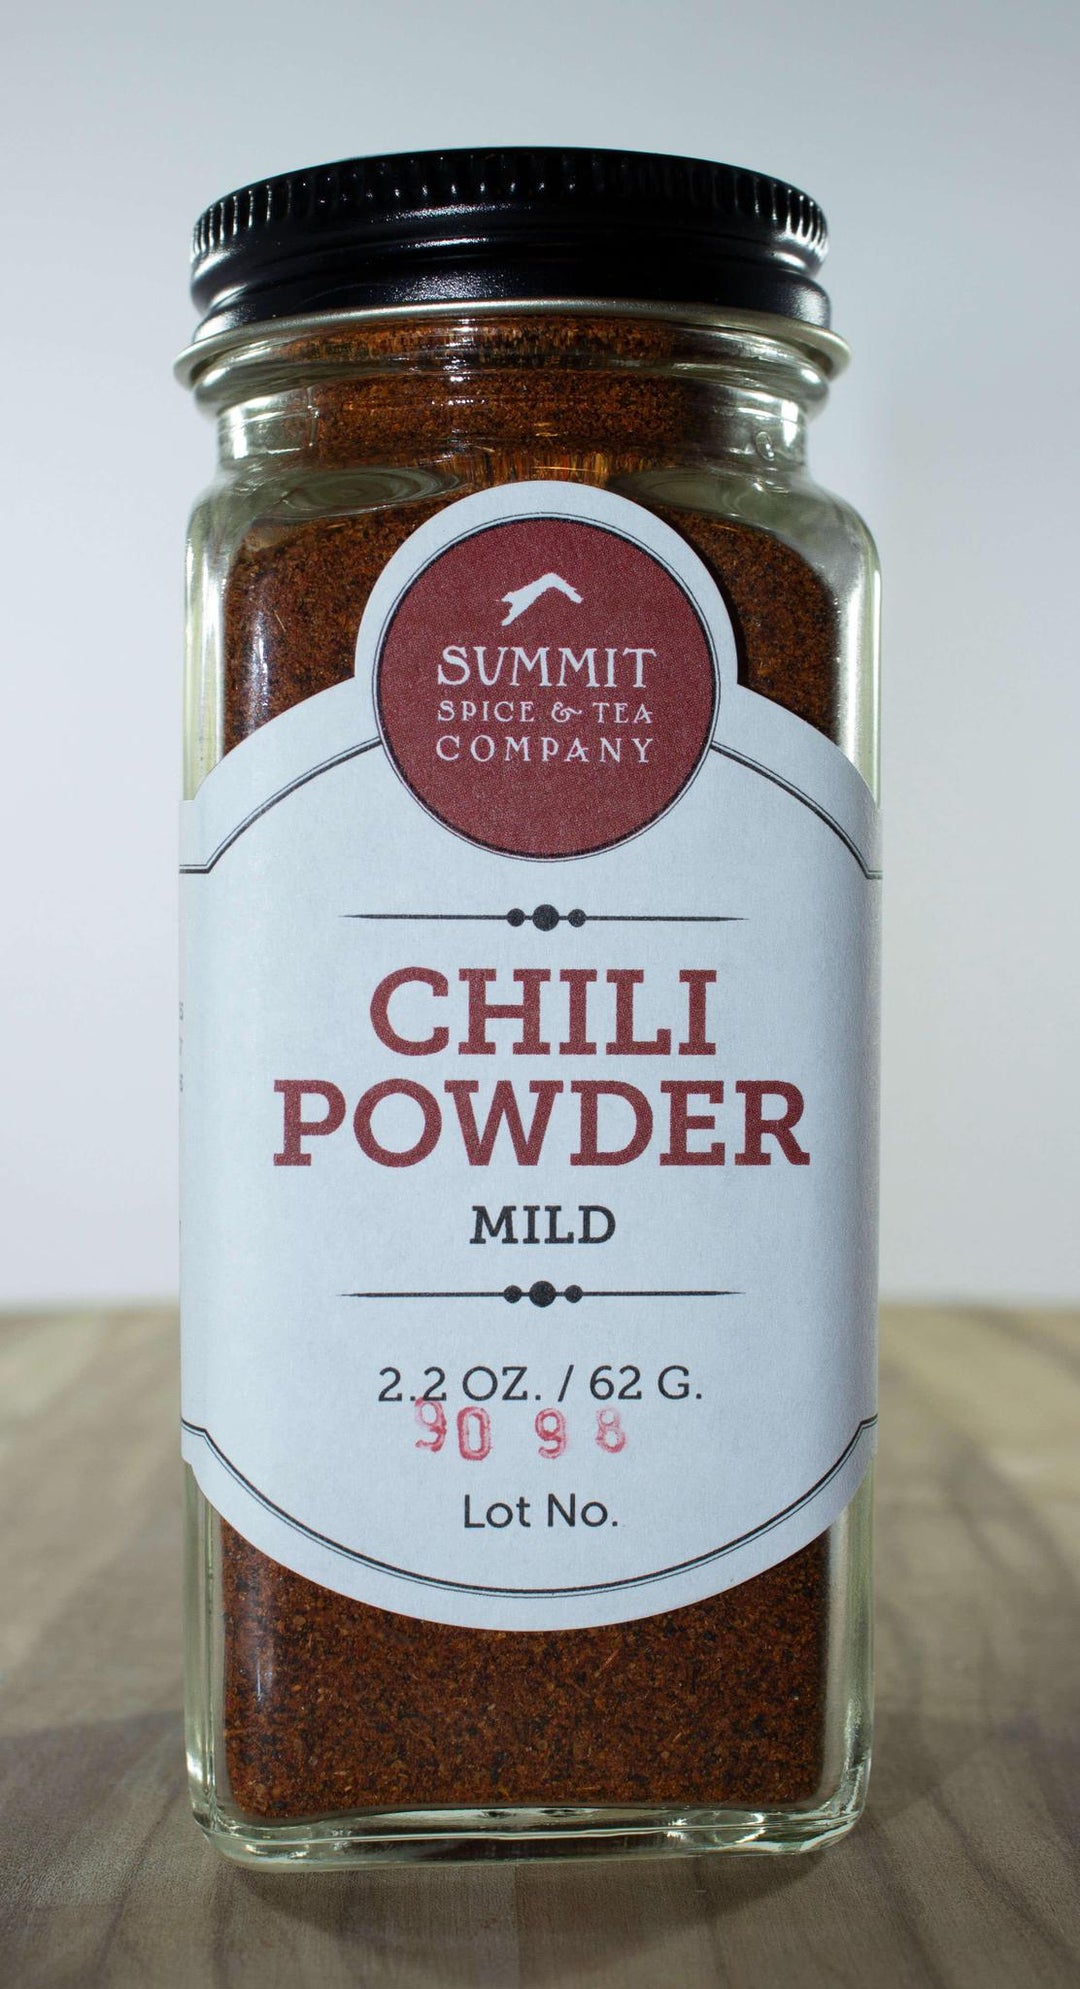 Chili Powder: Mild